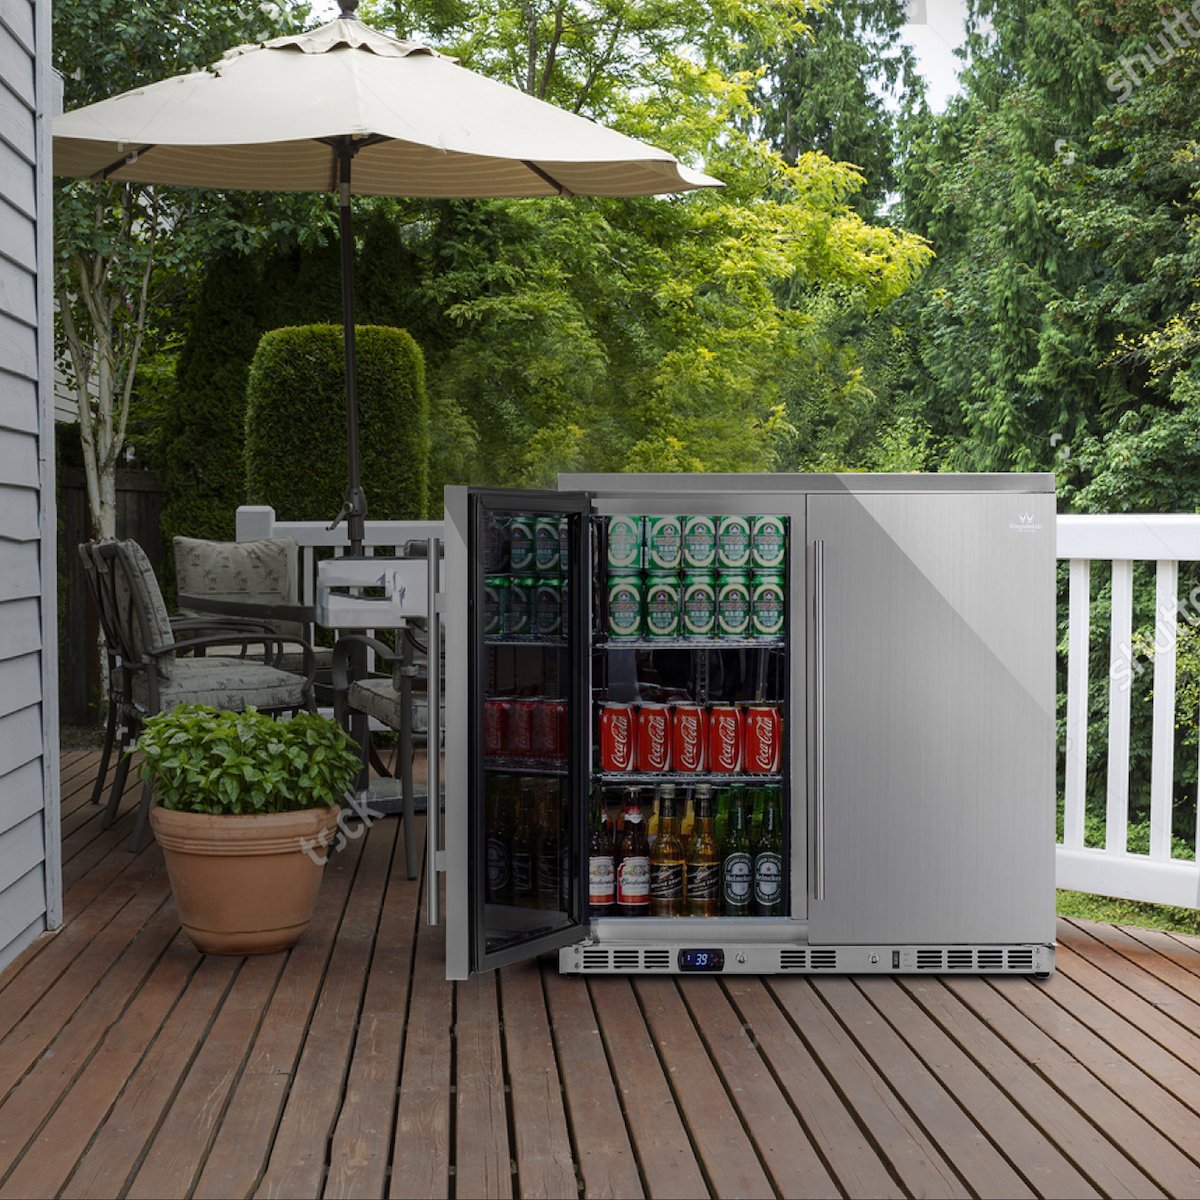 Kingsbottle 36 Inch Outdoor Beverage Refrigerator 2 Door For Home KBU56ASD-Wine Coolers-The Wine Cooler Club